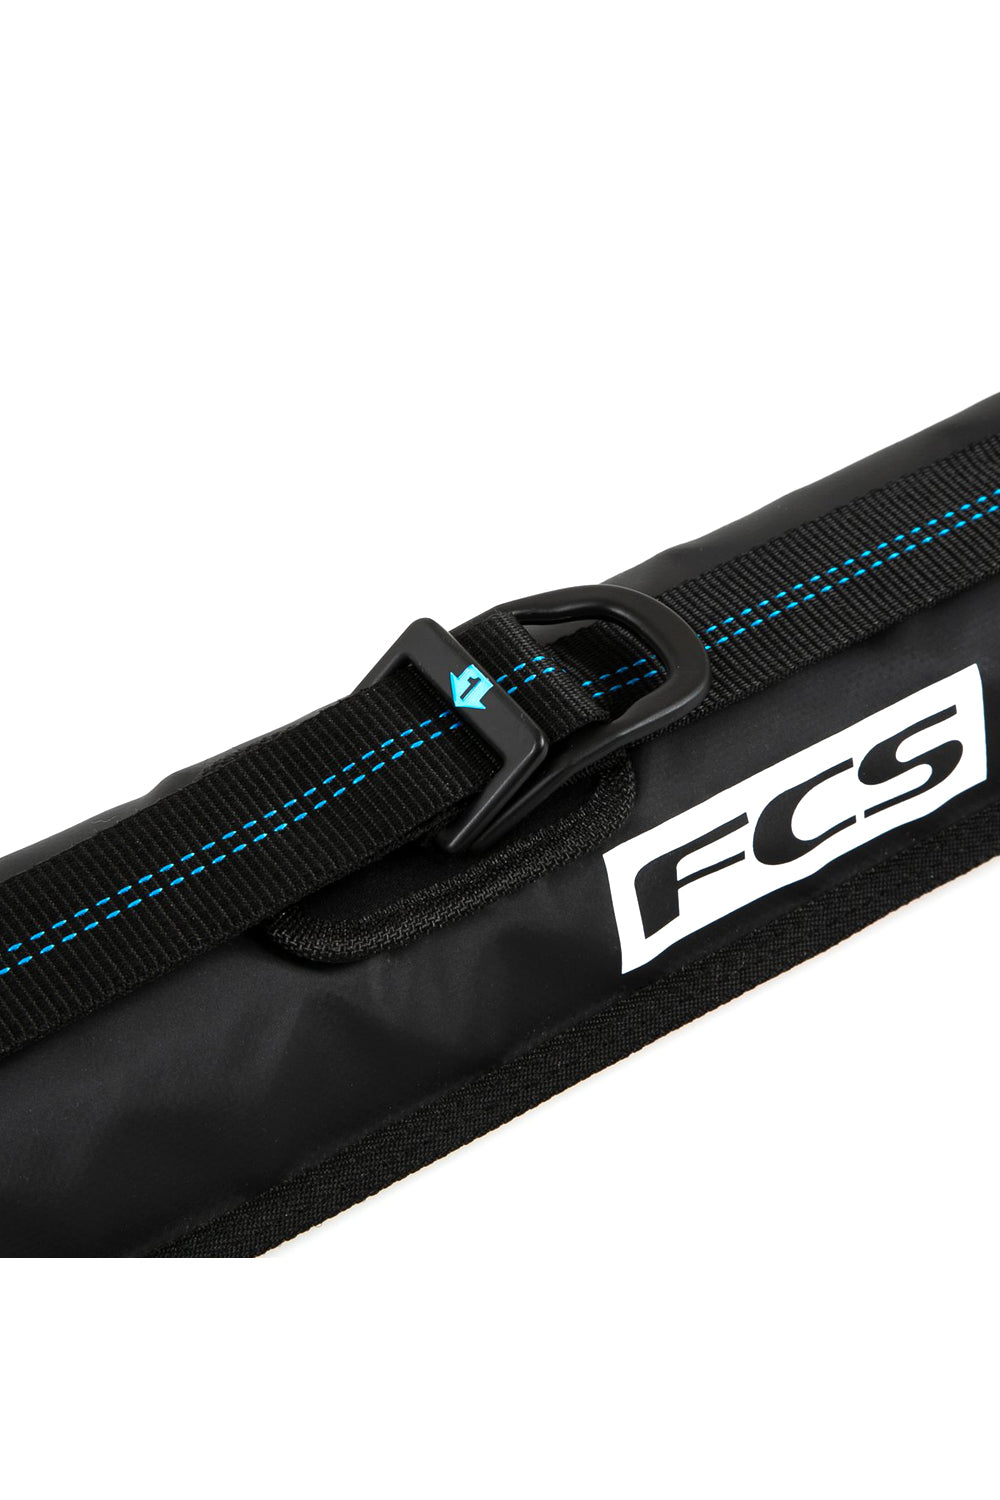 FCS D-Ring Surfboard Soft Racks